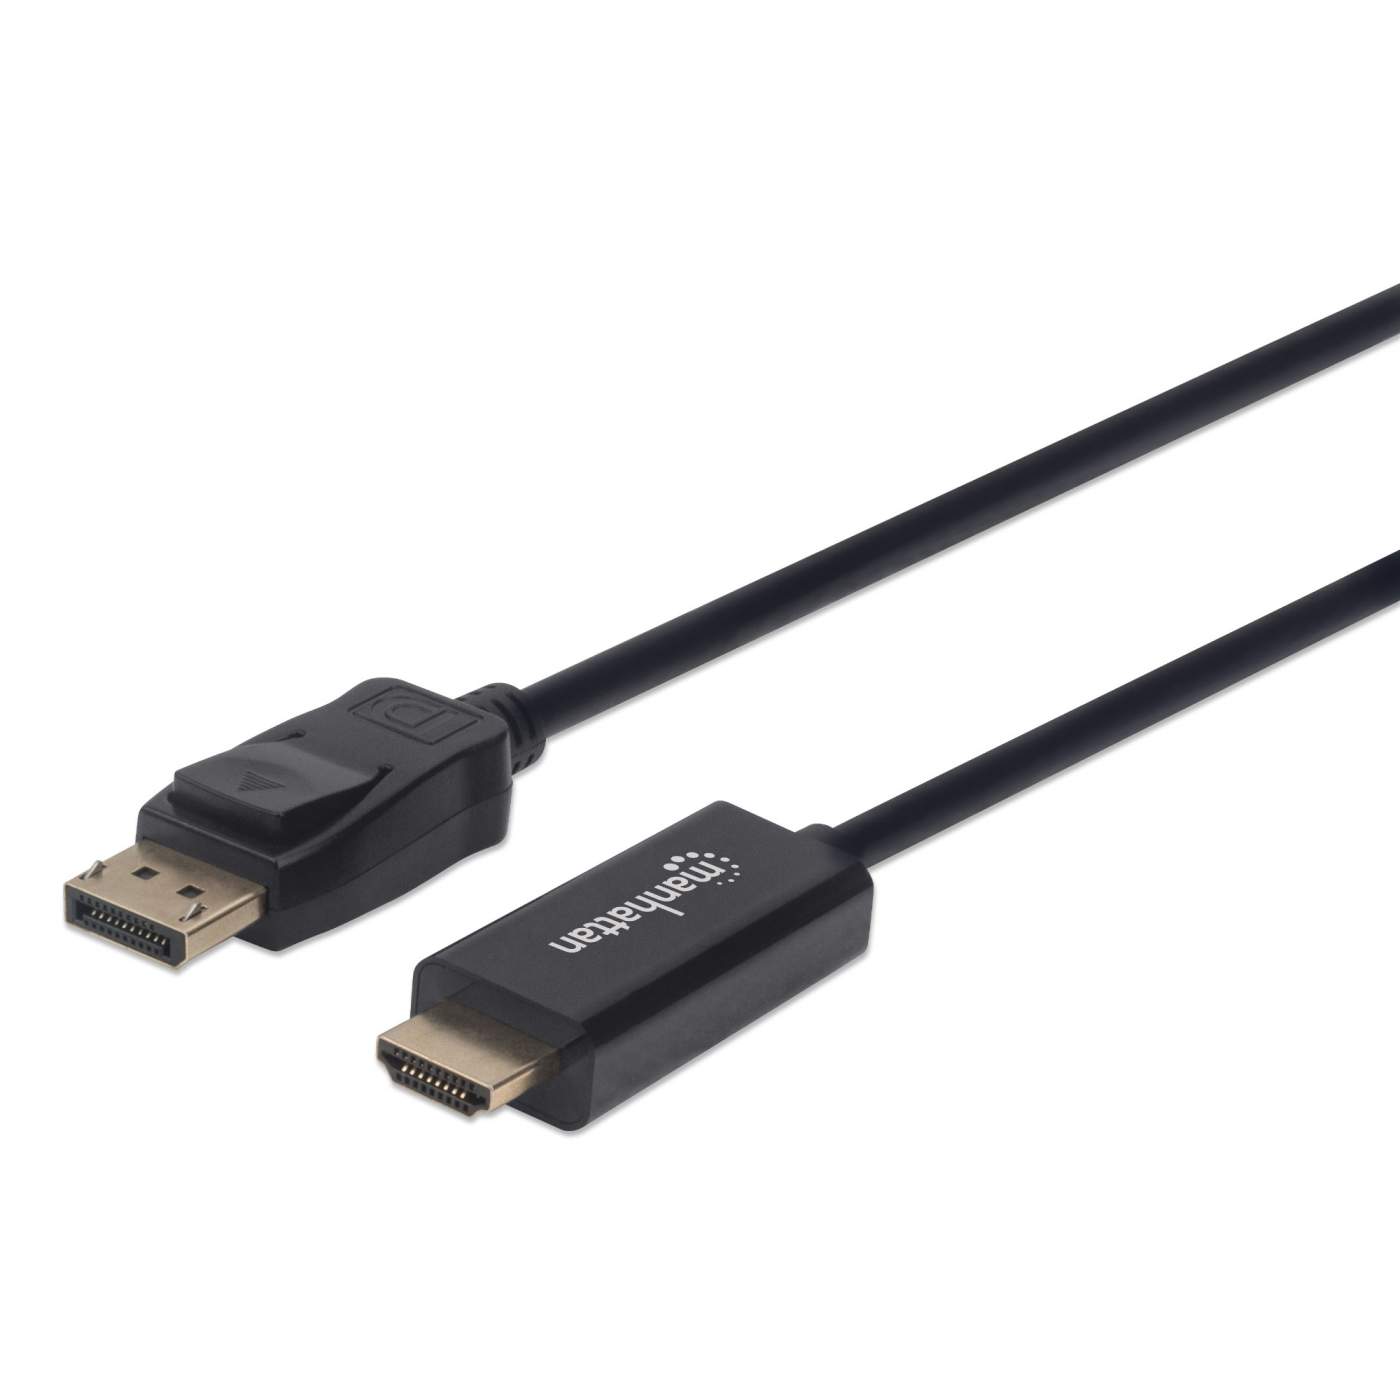 4K@60Hz DisplayPort to HDMI Cable Image 1